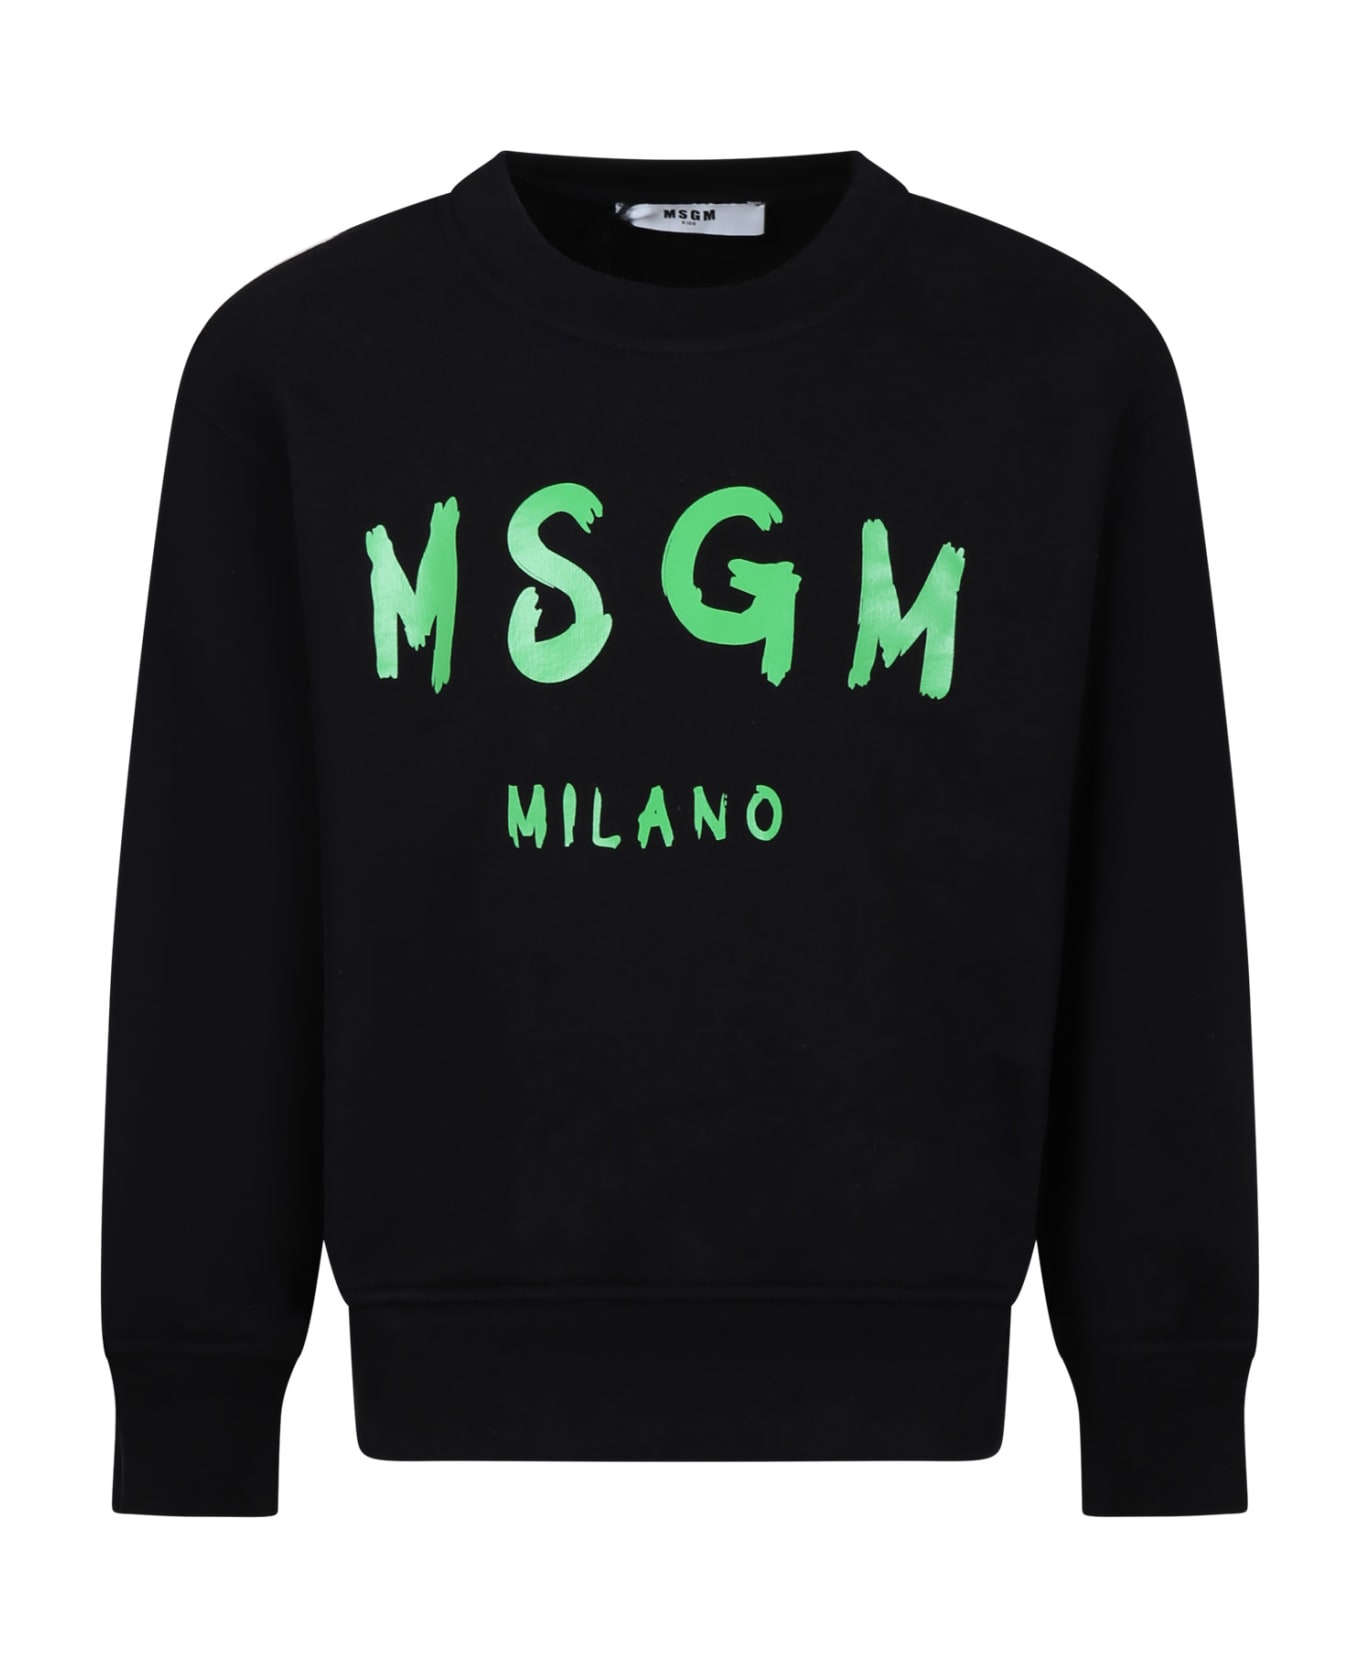 MSGM Black Sweatshirt For Kids With Green Logo - Black